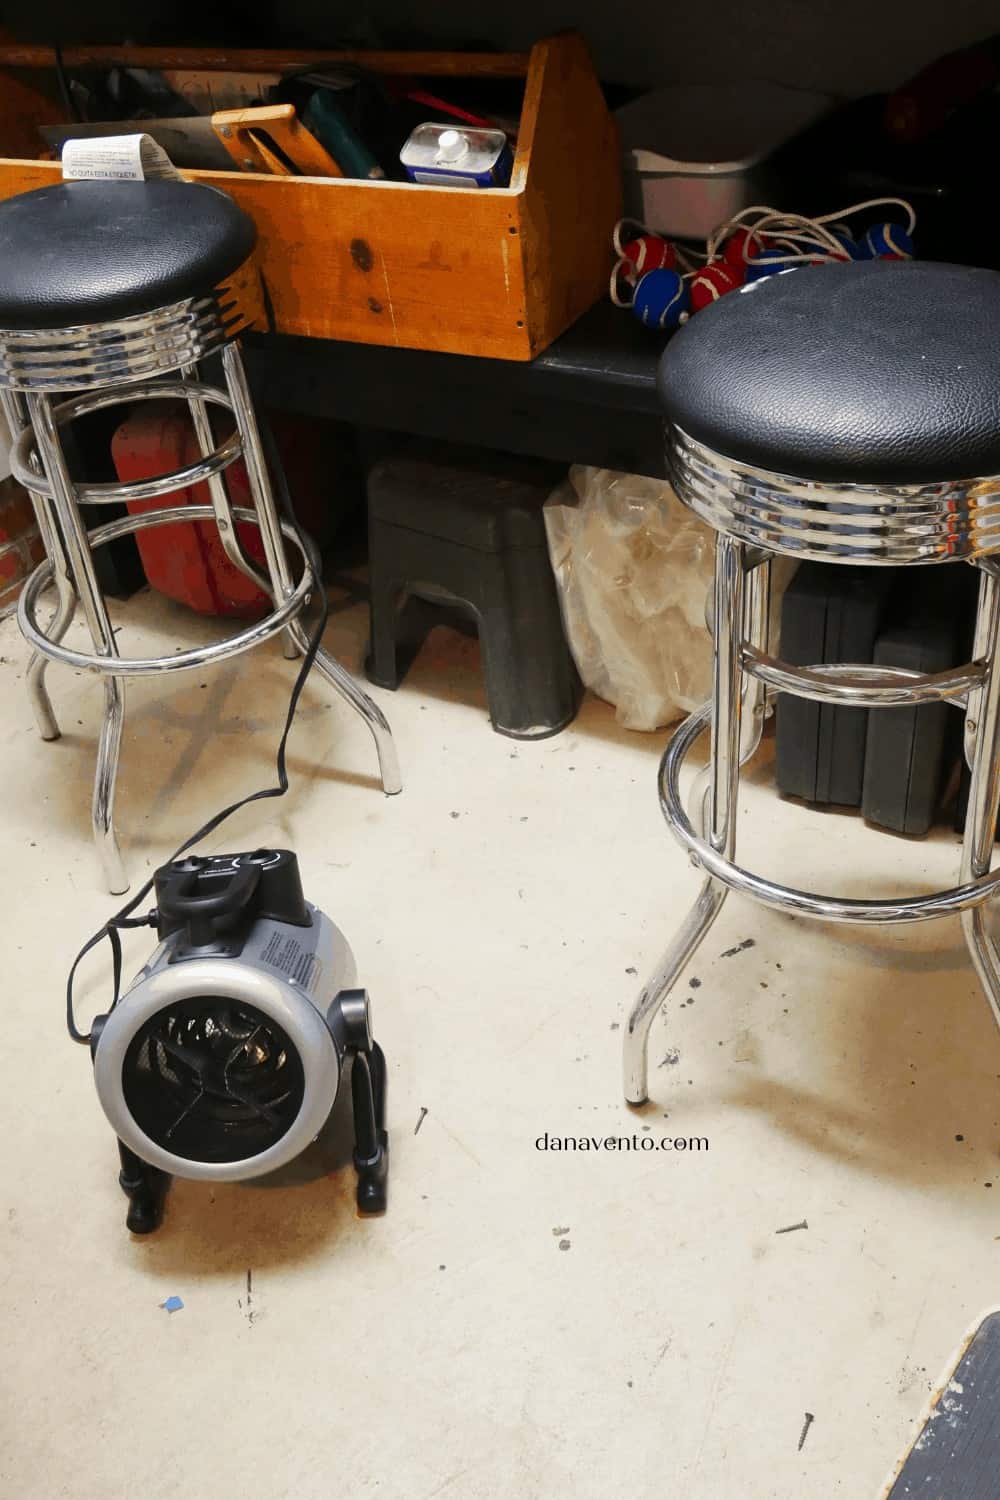 Portable Heater On Floor In garage workshop